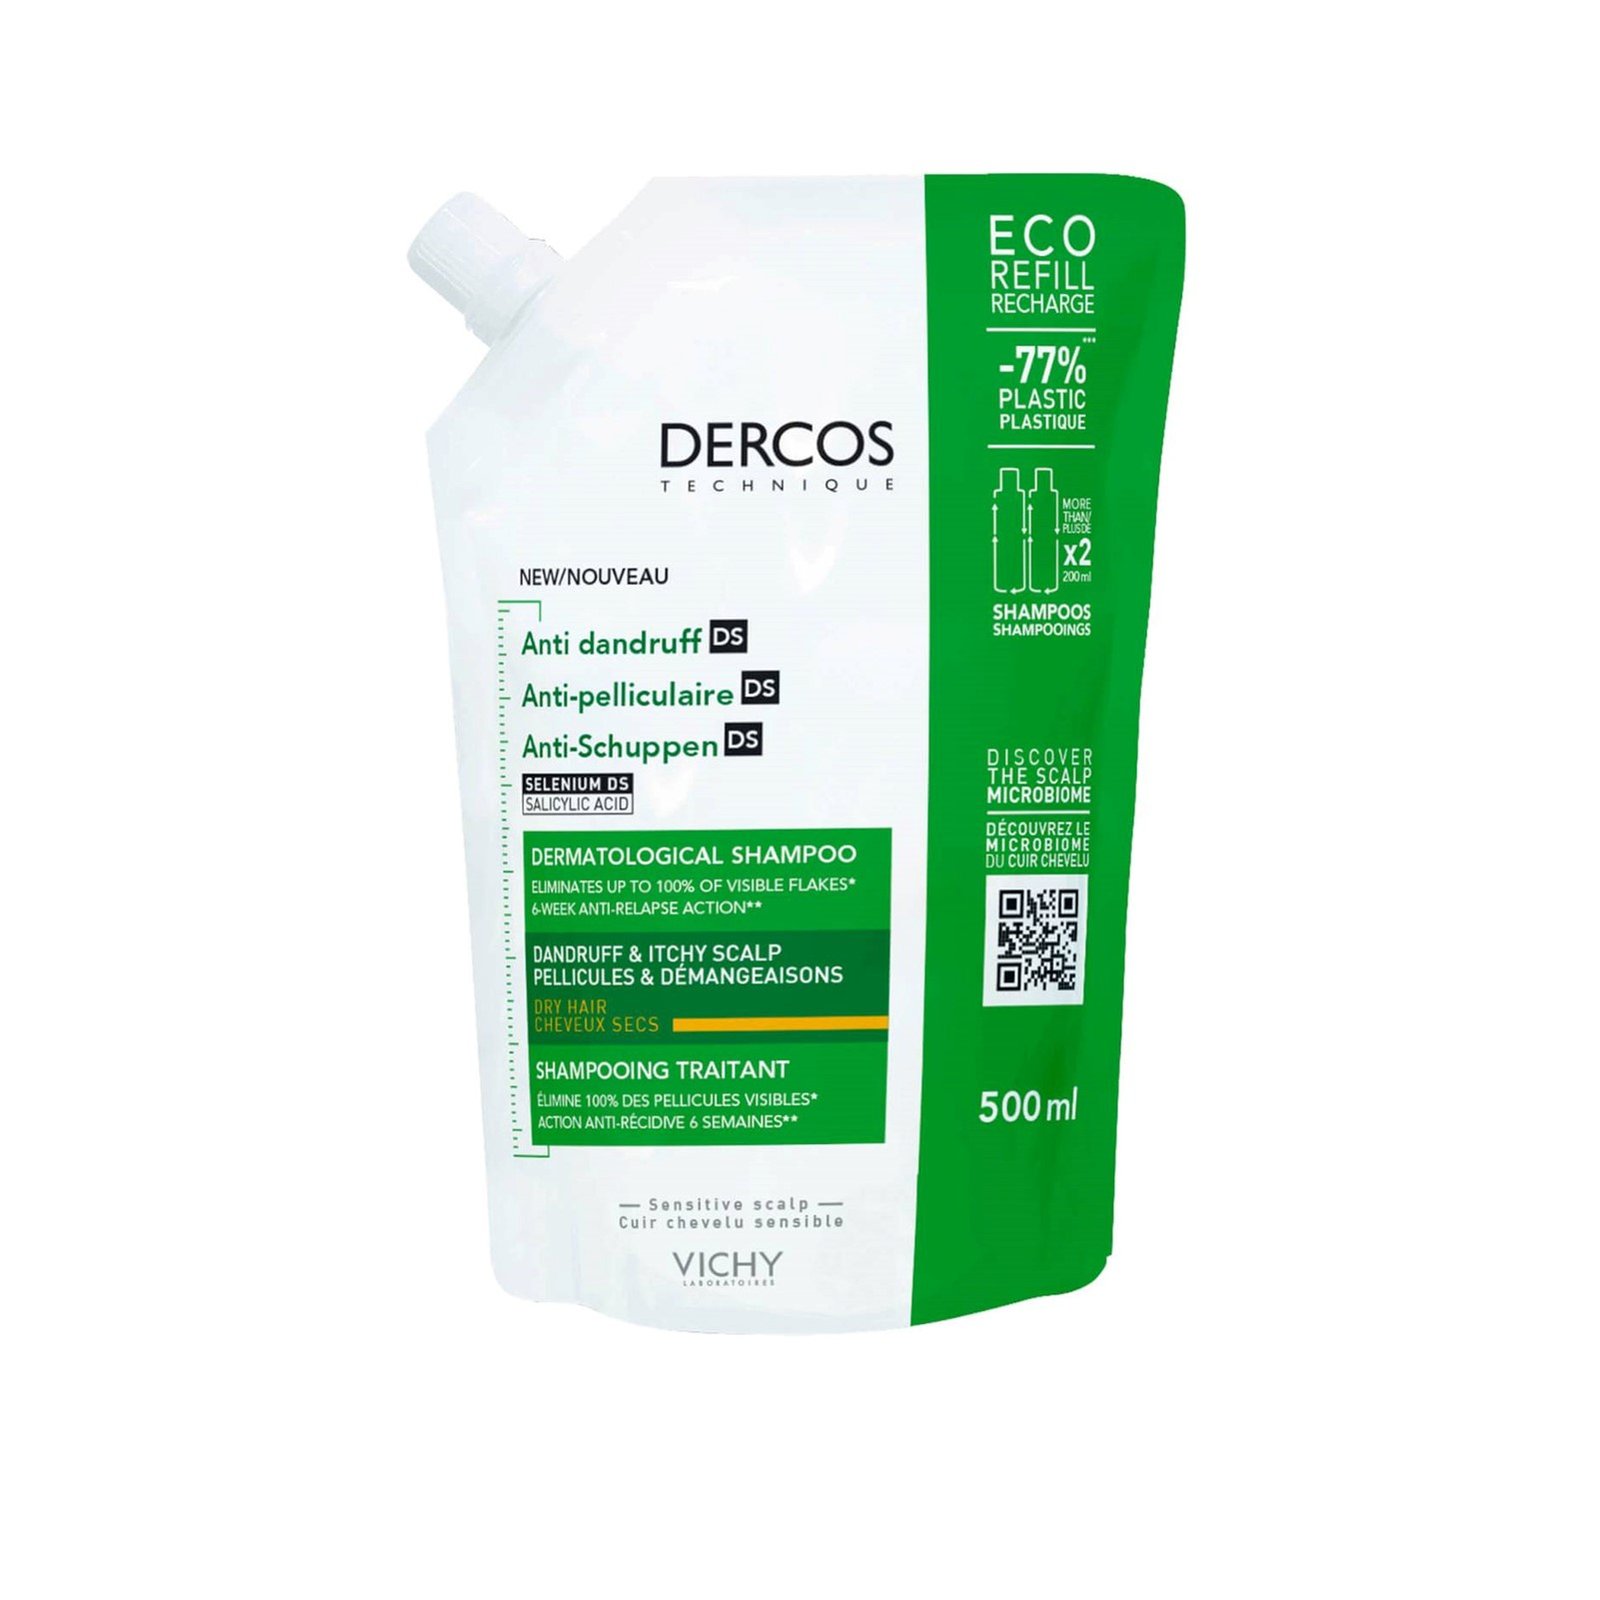 Vichy Dercos Anti-Dandruff DS Shampoo for Dry Hair Eco Refill 500ml